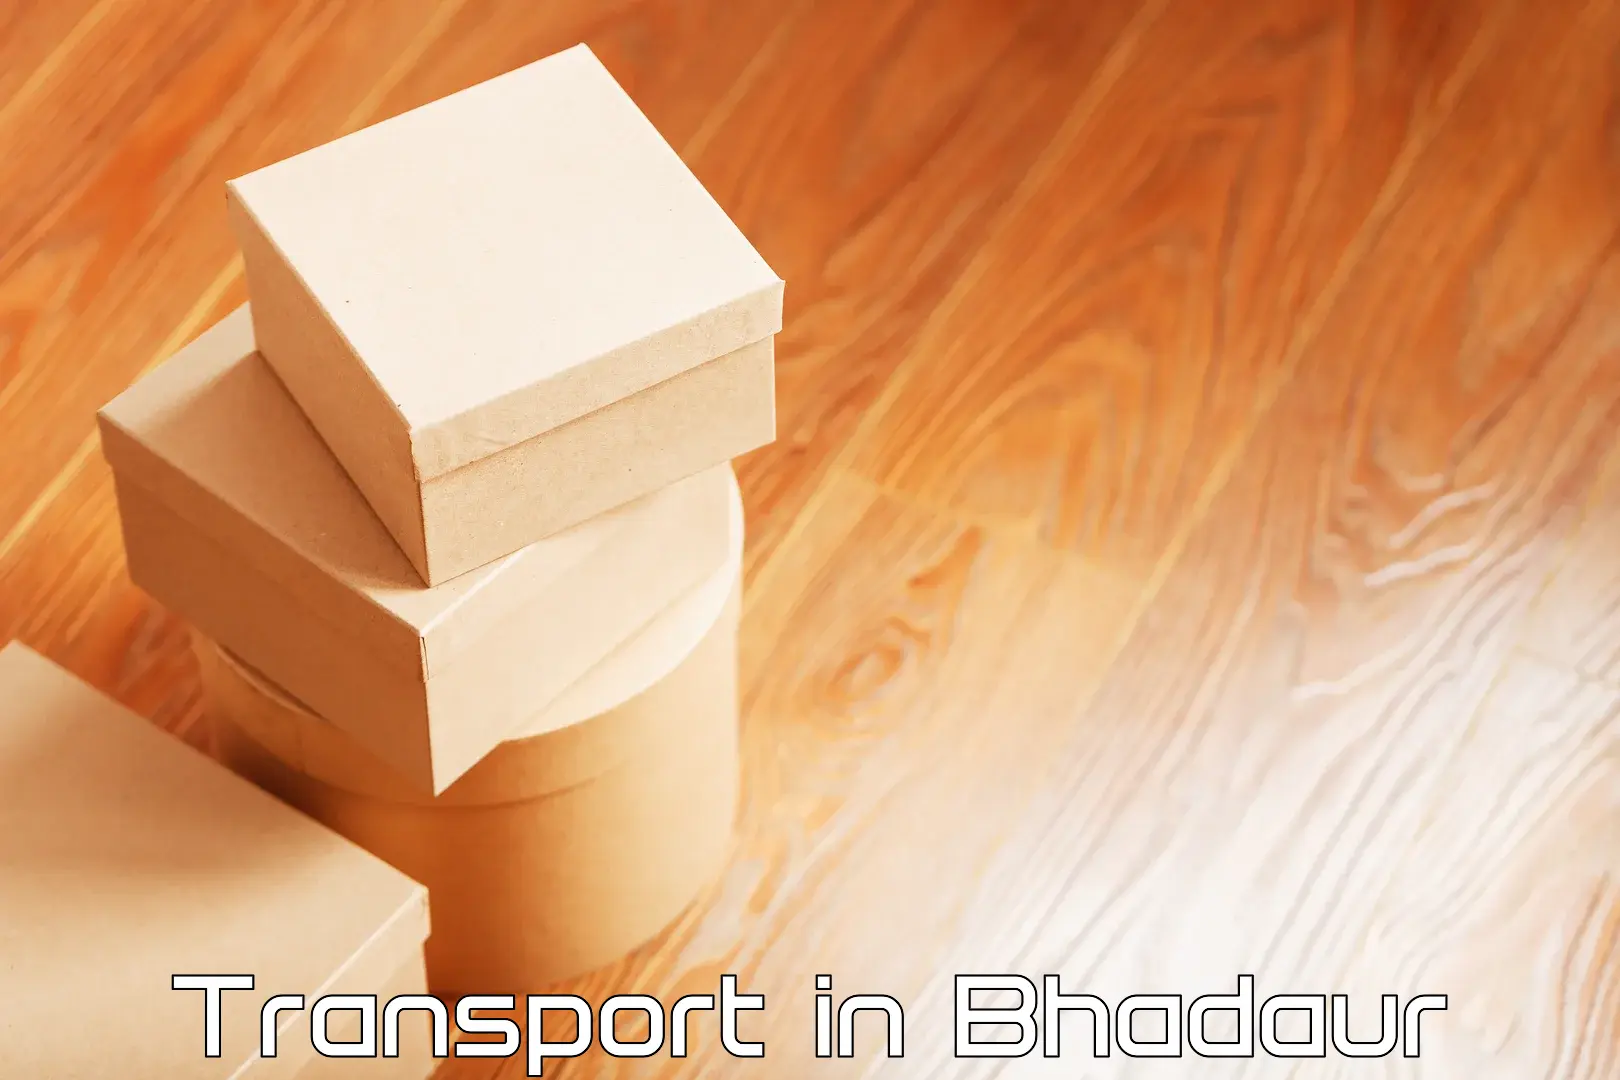 Online transport booking in Bhadaur